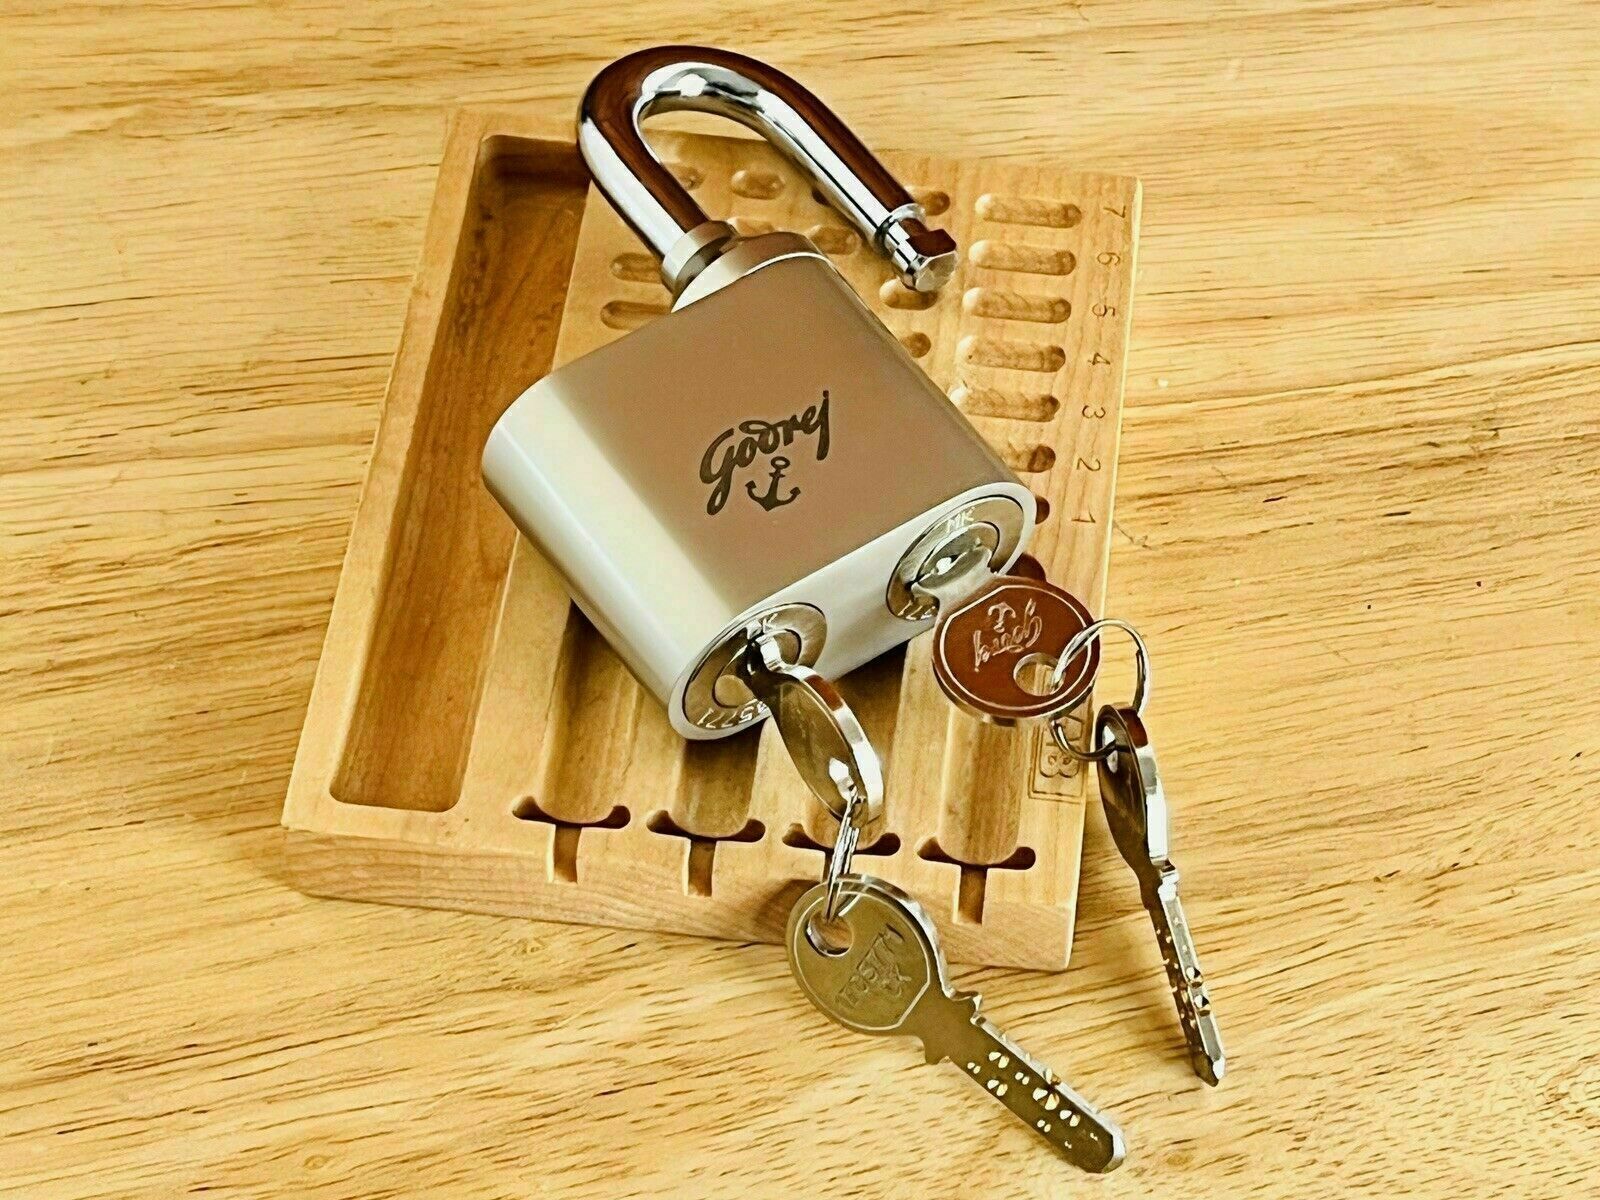 Dual Access Padlock With 2 Sets of Keys Locksport High Security By Godrej Locks.